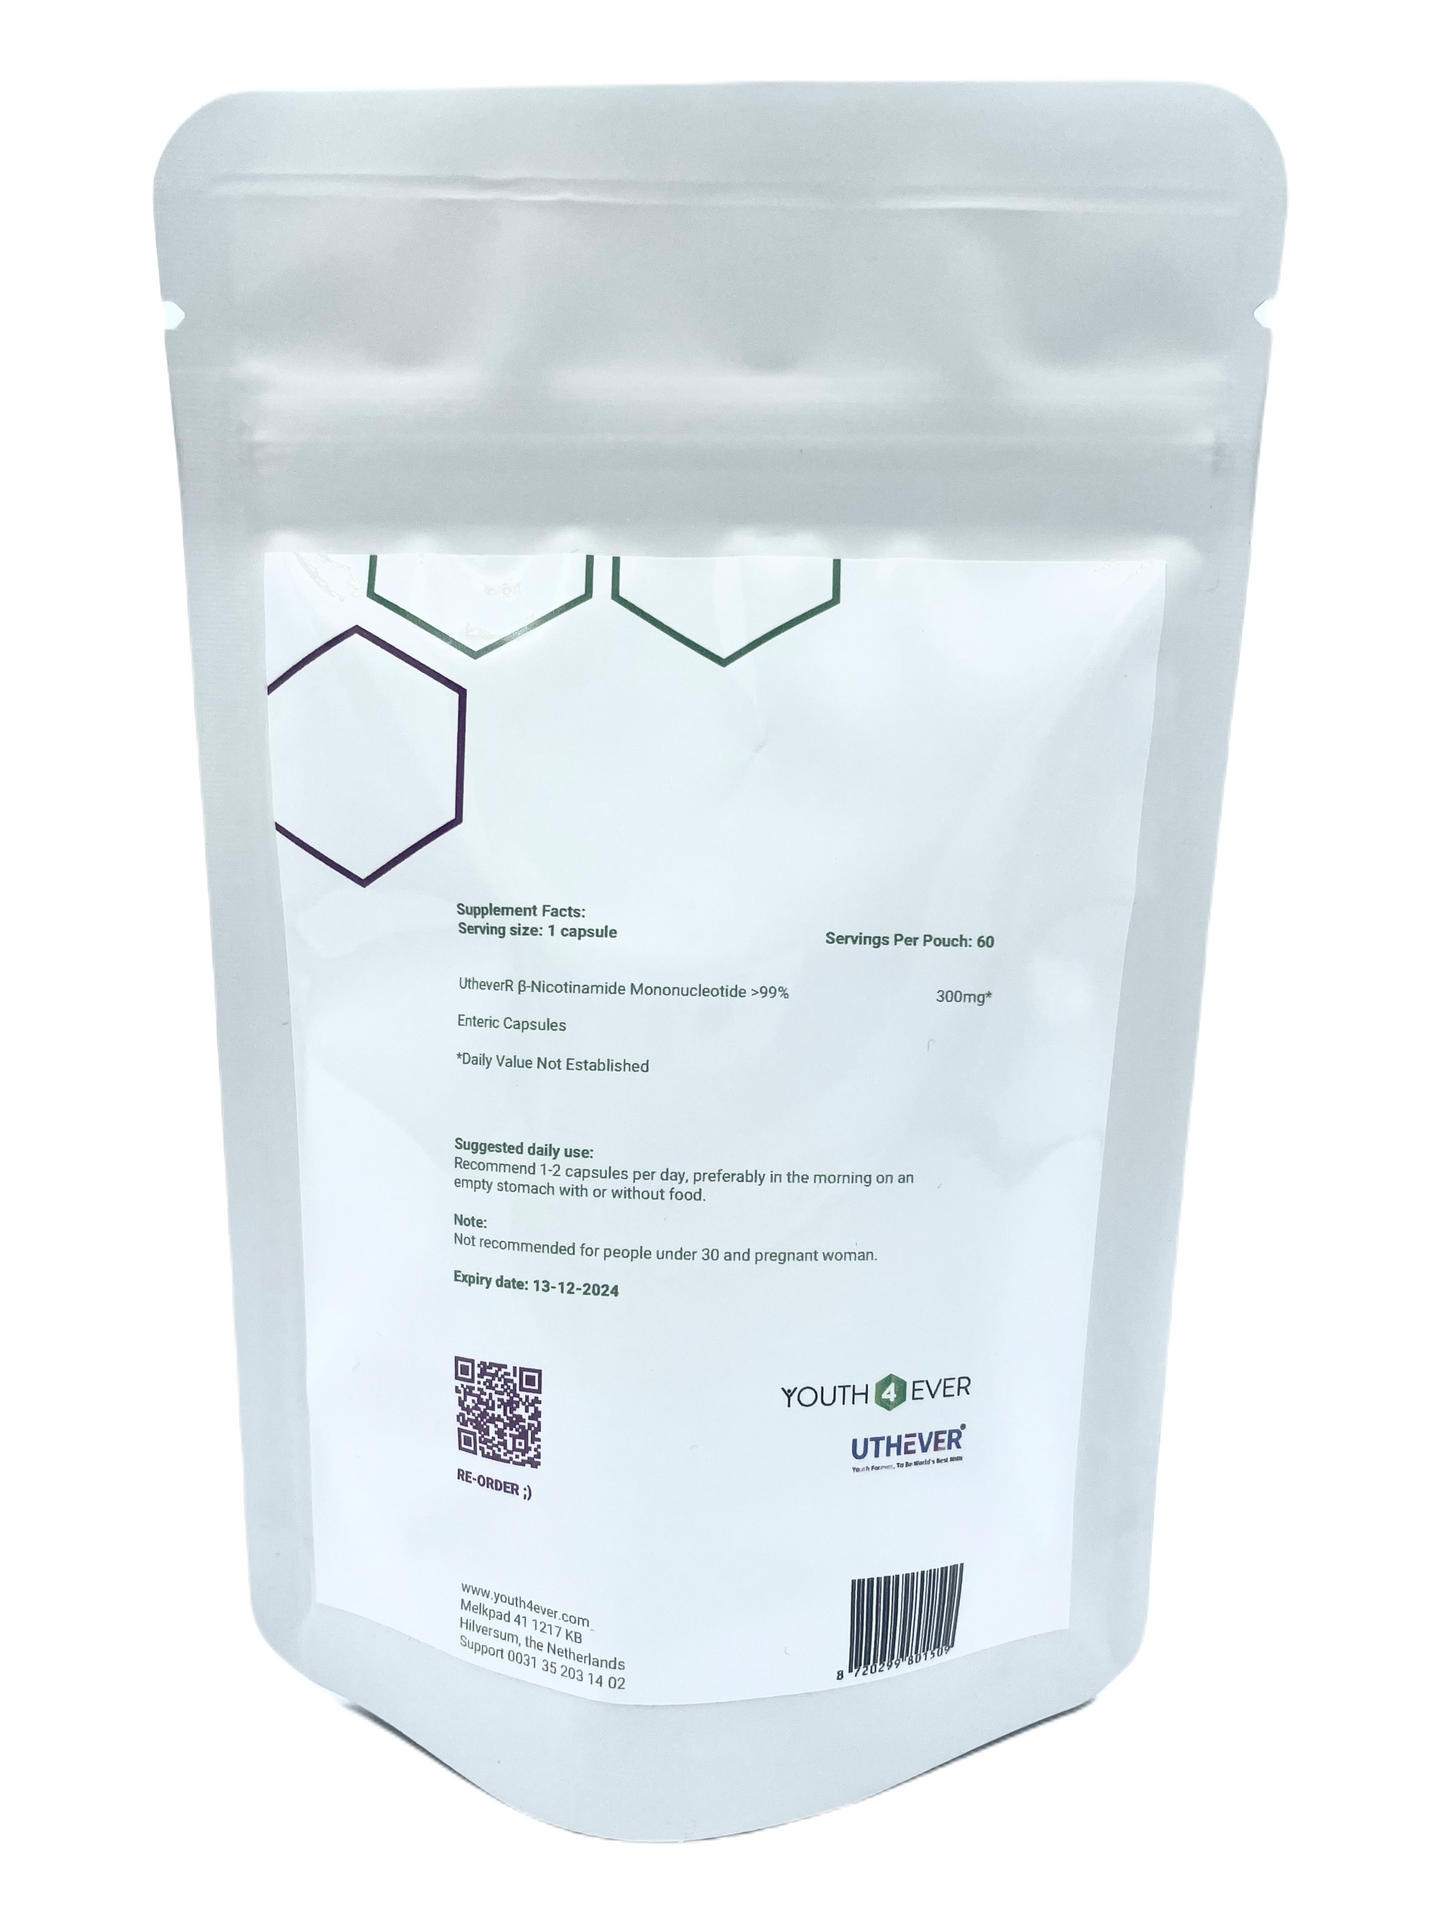 NMN PRO 300 - 72 grams NMN - 99% pure - 240 capsules